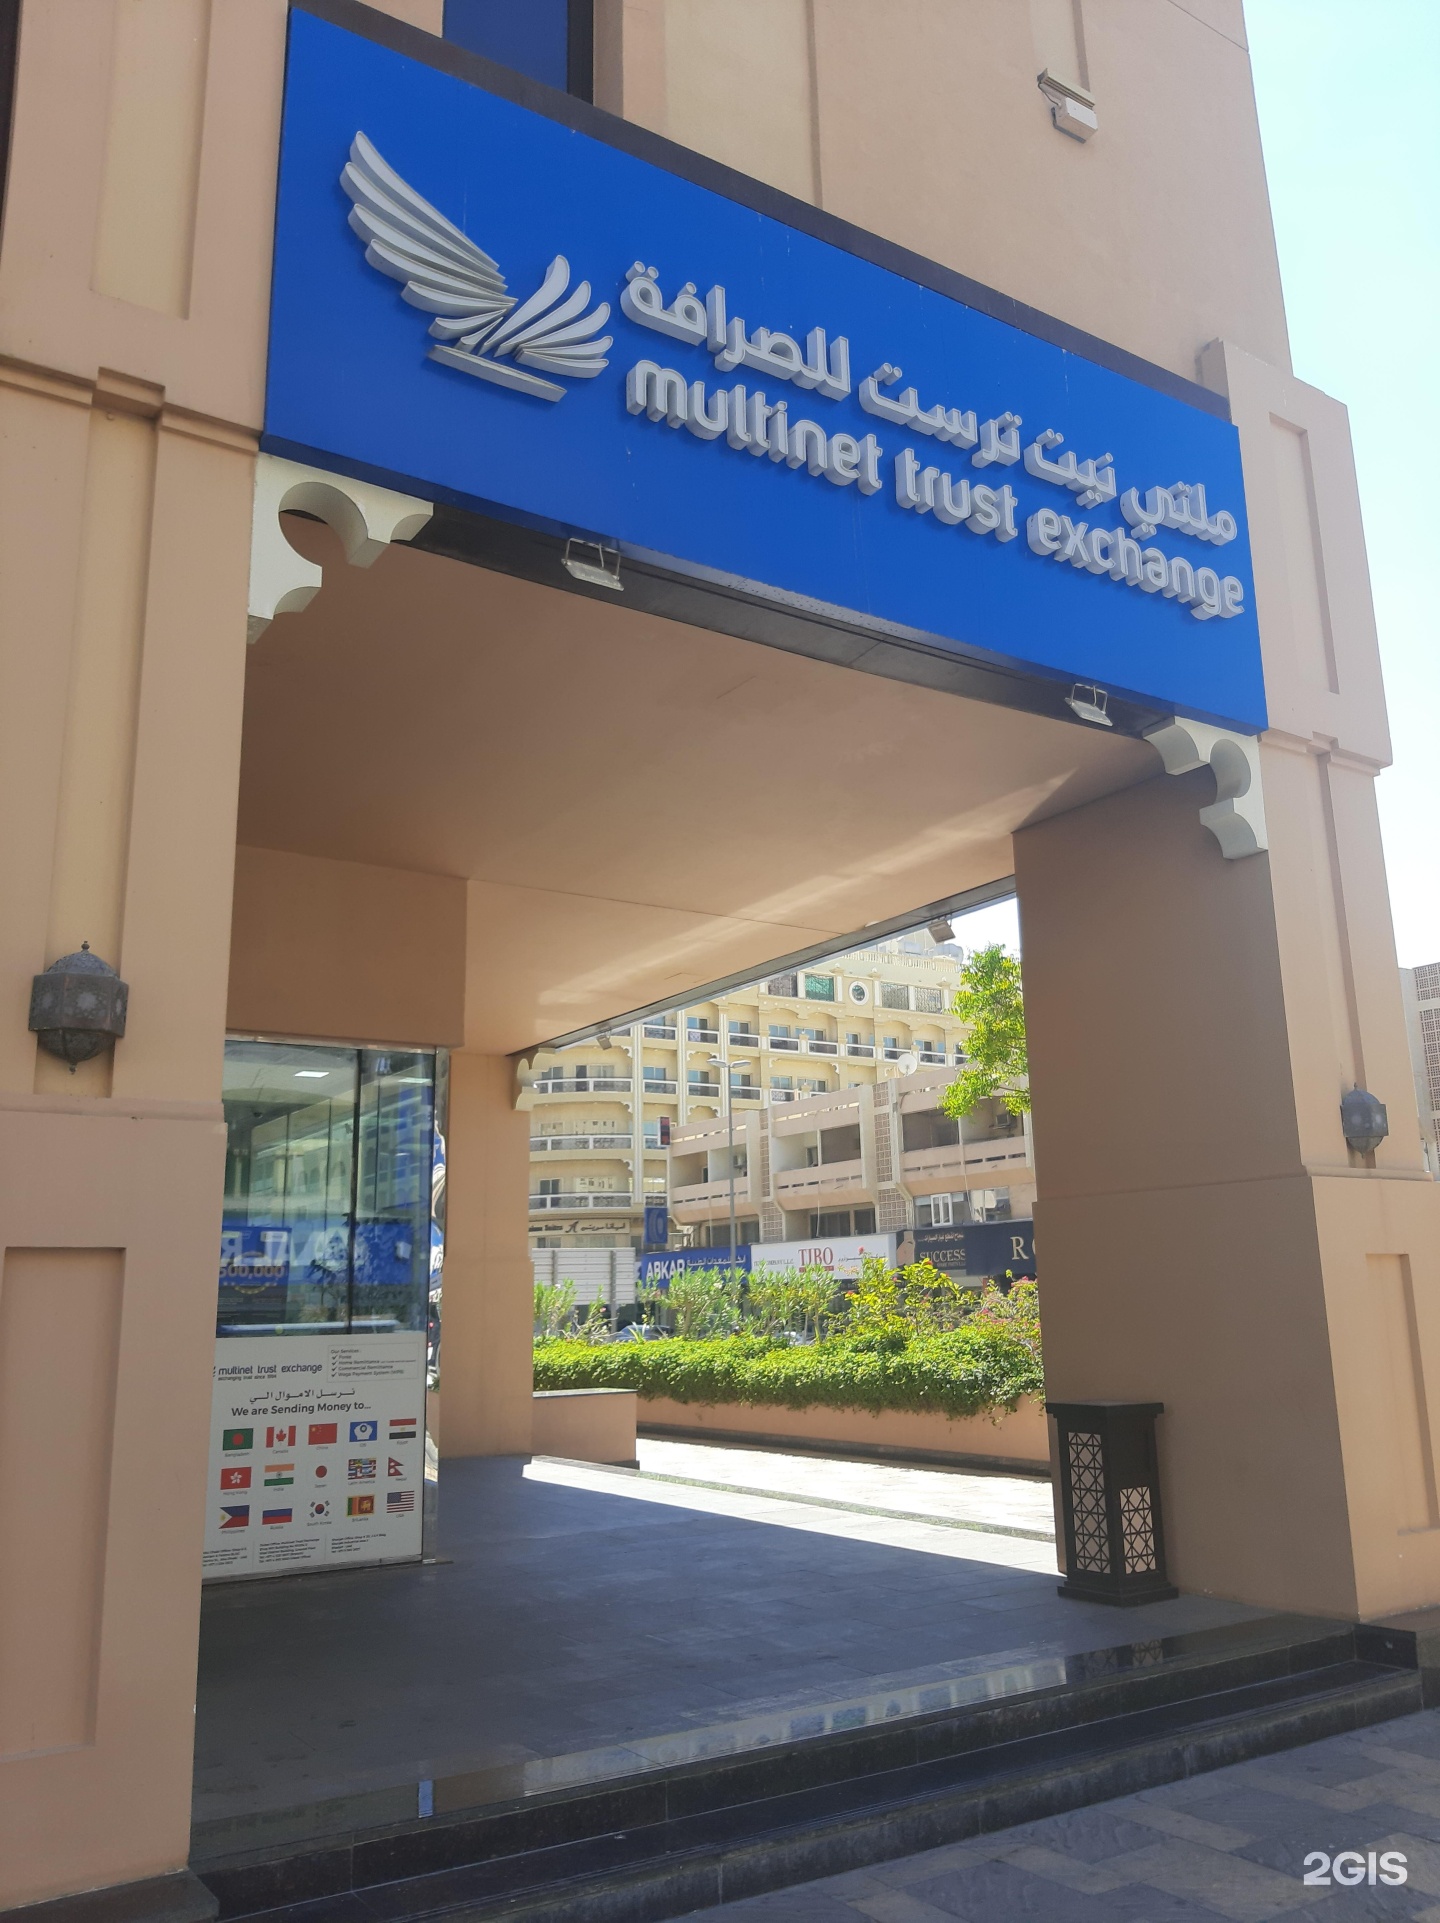 Driving directions to Multinet Trust Exchange LLC, Al Maktoum Hospital Rd, Dubai - Waze